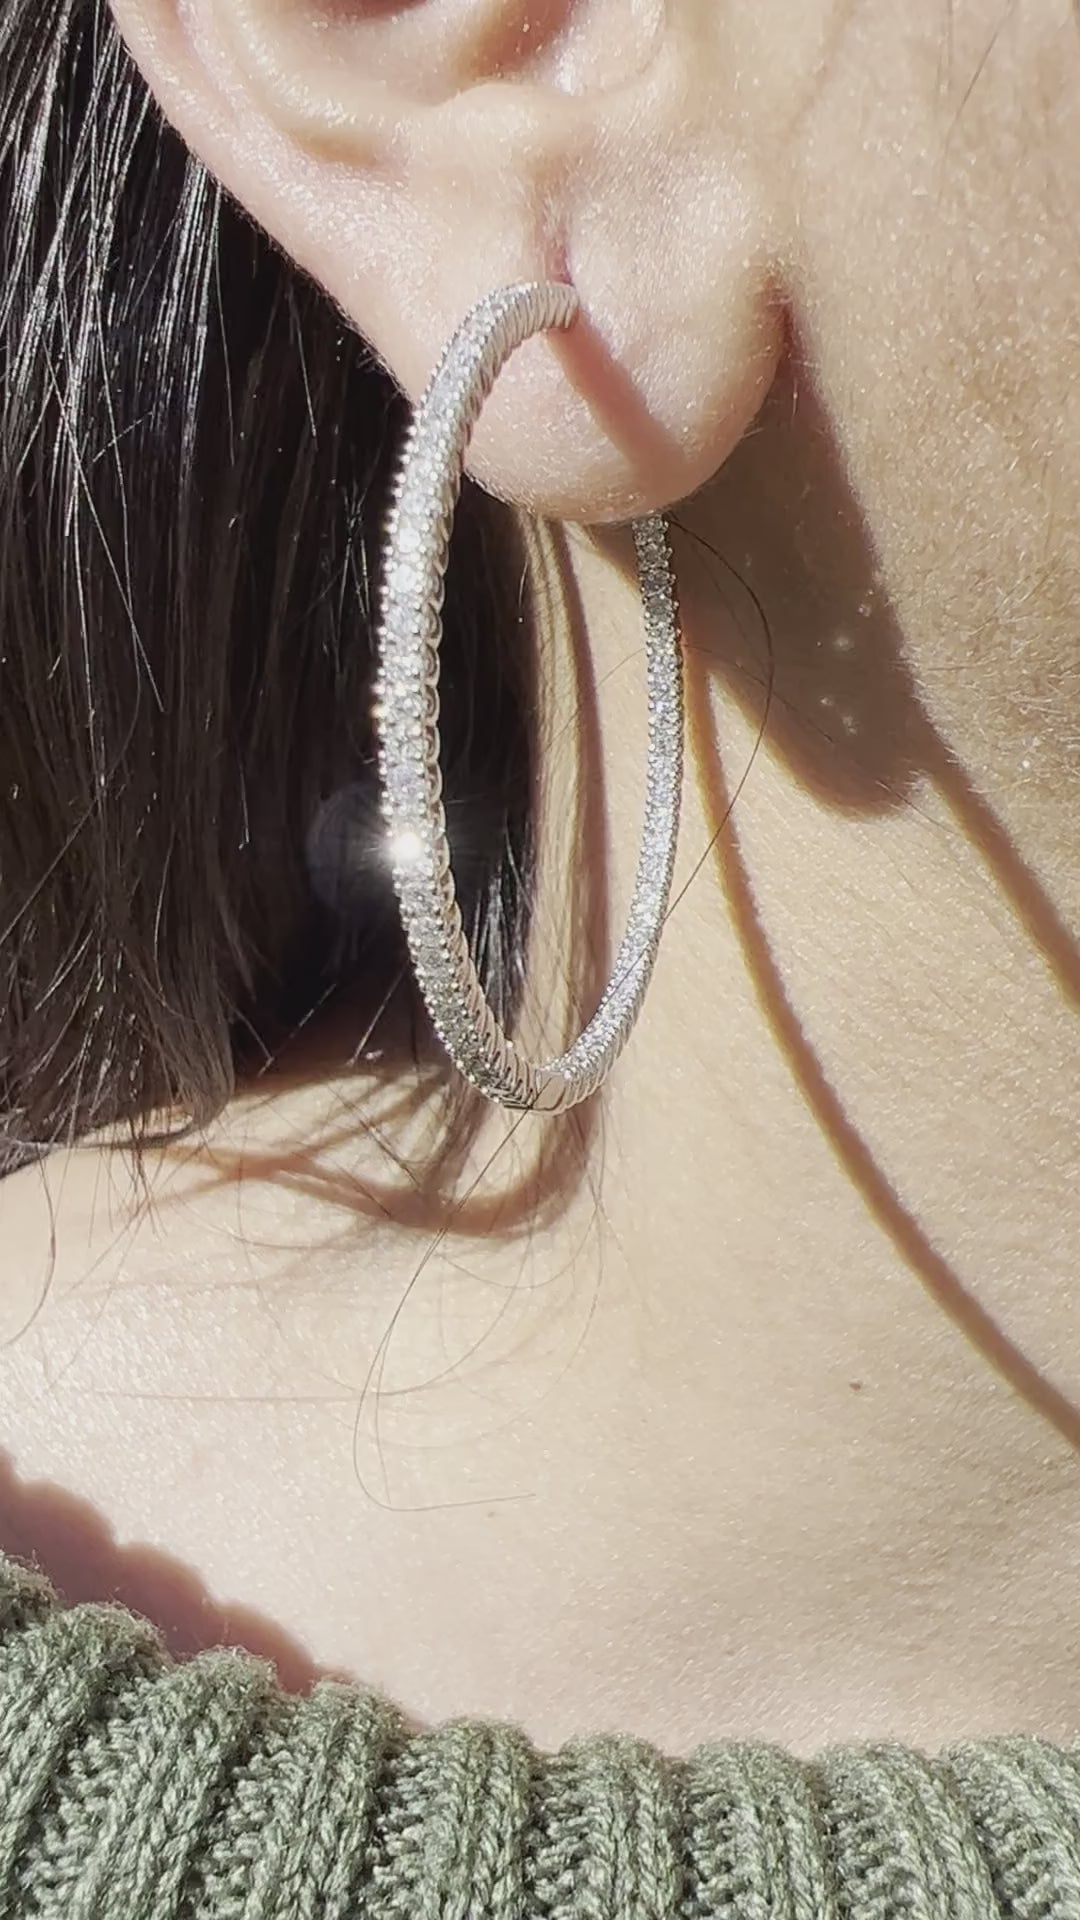 1.5 ct Diamond Flexible Rose Gold Hoop Earrings